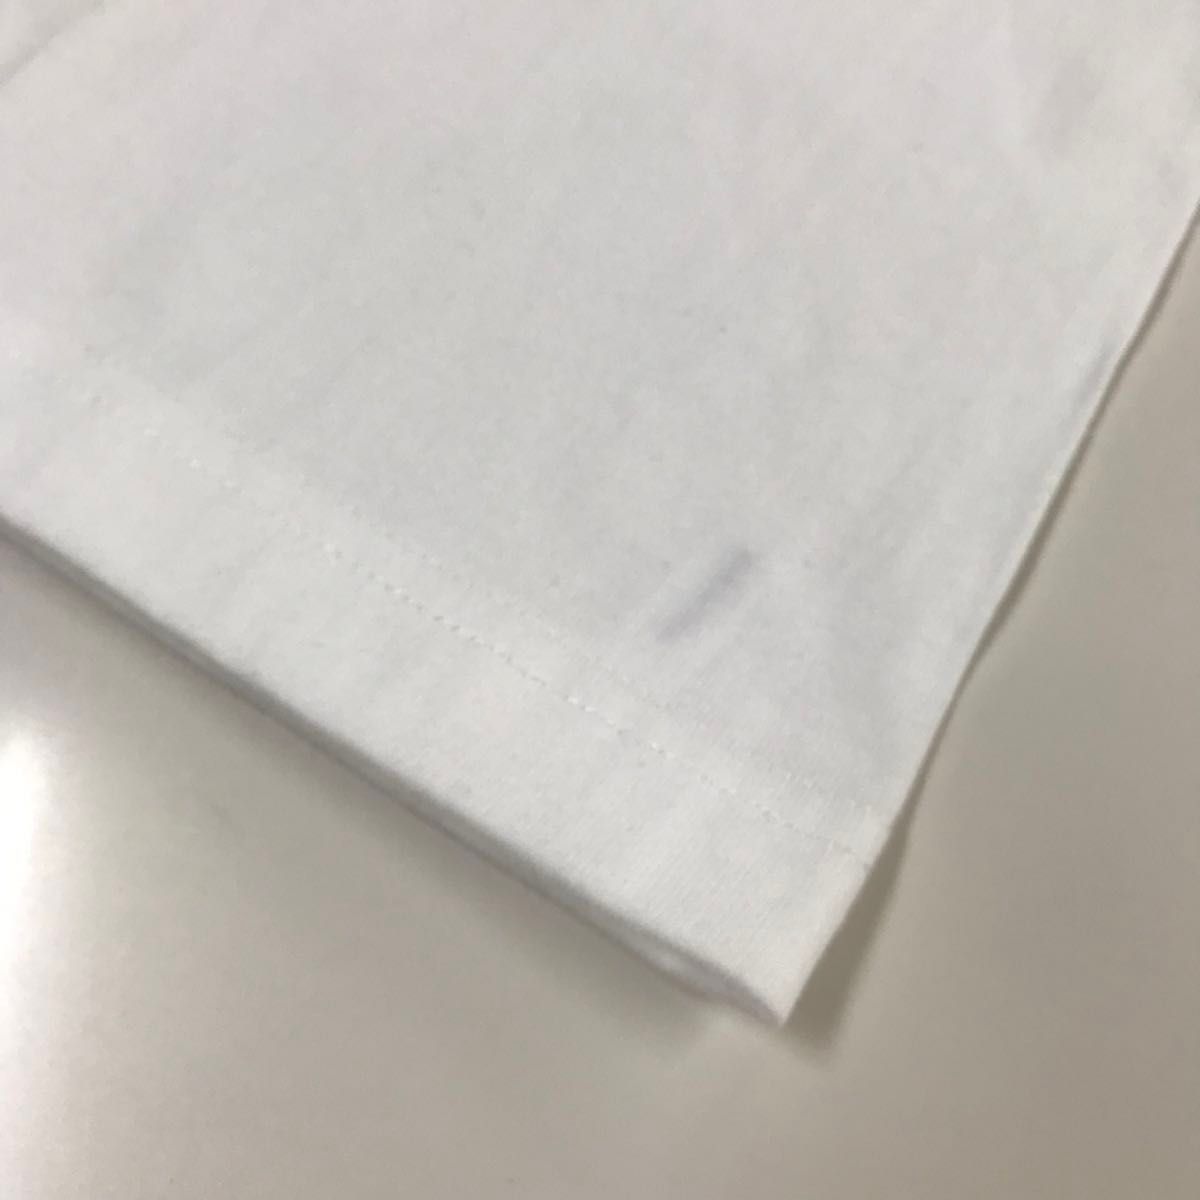 Tシャツ 無地 プレミアム 6.2オンス【5942-01】L ホワイト 綿100%